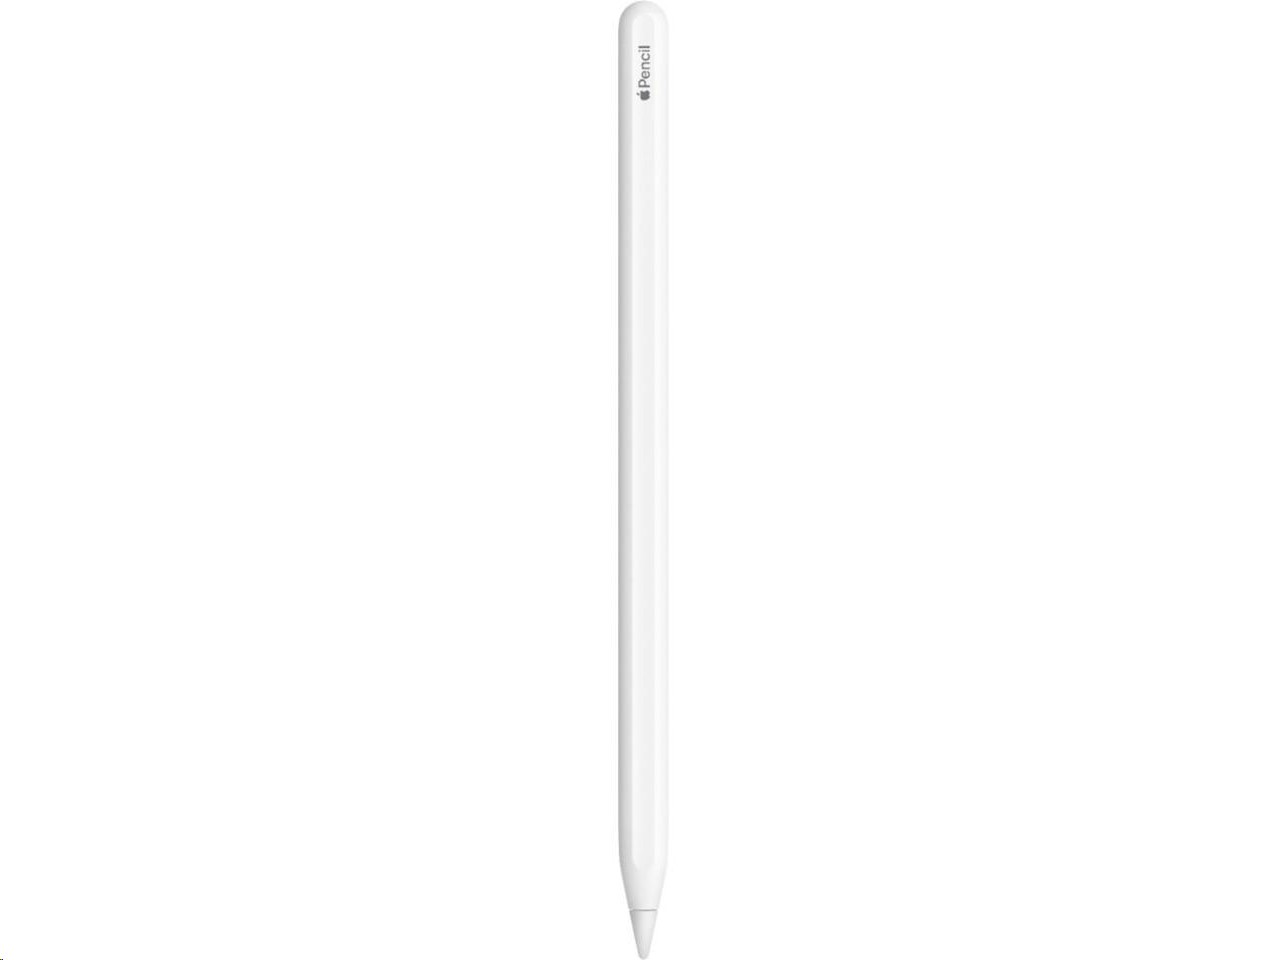 Apple MU8F2AM/A Pencil 2nd Generation Stylus For 11in Ipad Pro 12.9in Ipad Pro MU8F2AM/A